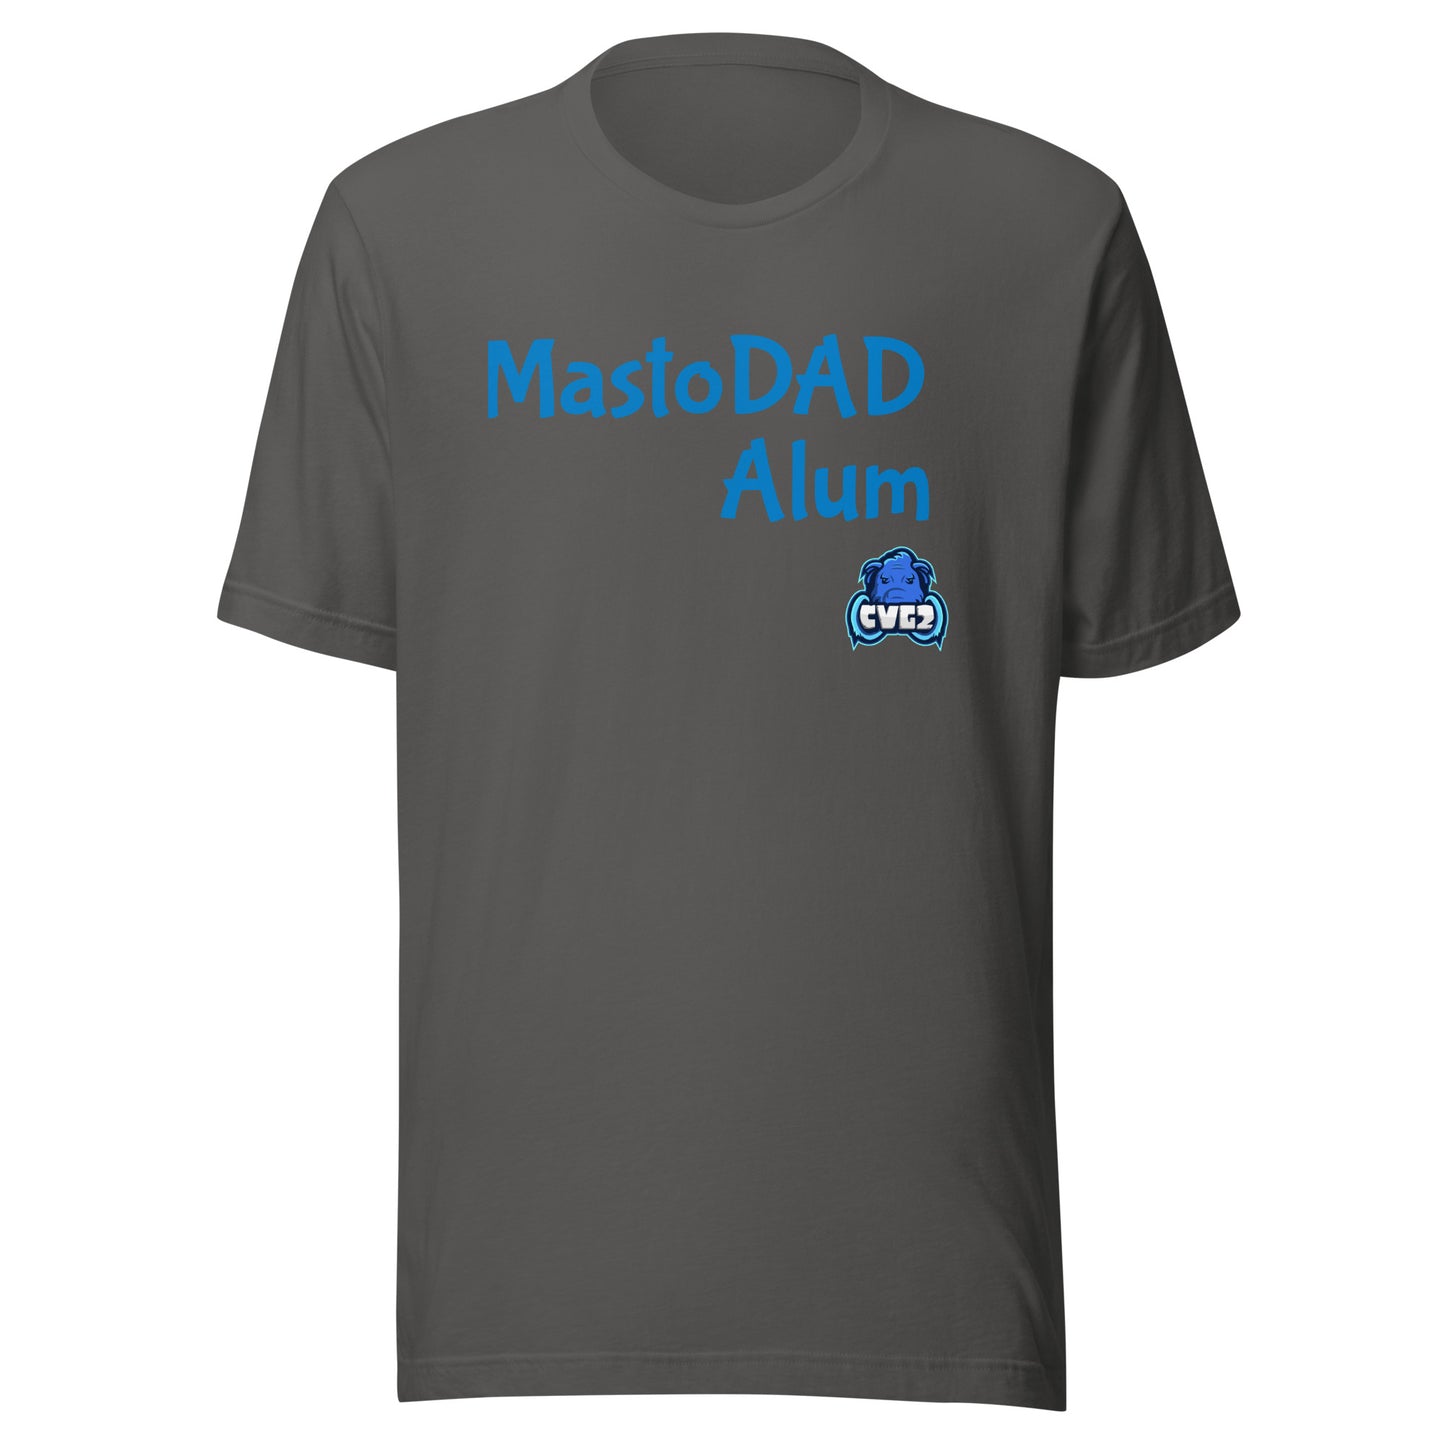 CVG2 MastoDAD Alum Unisex t-shirt